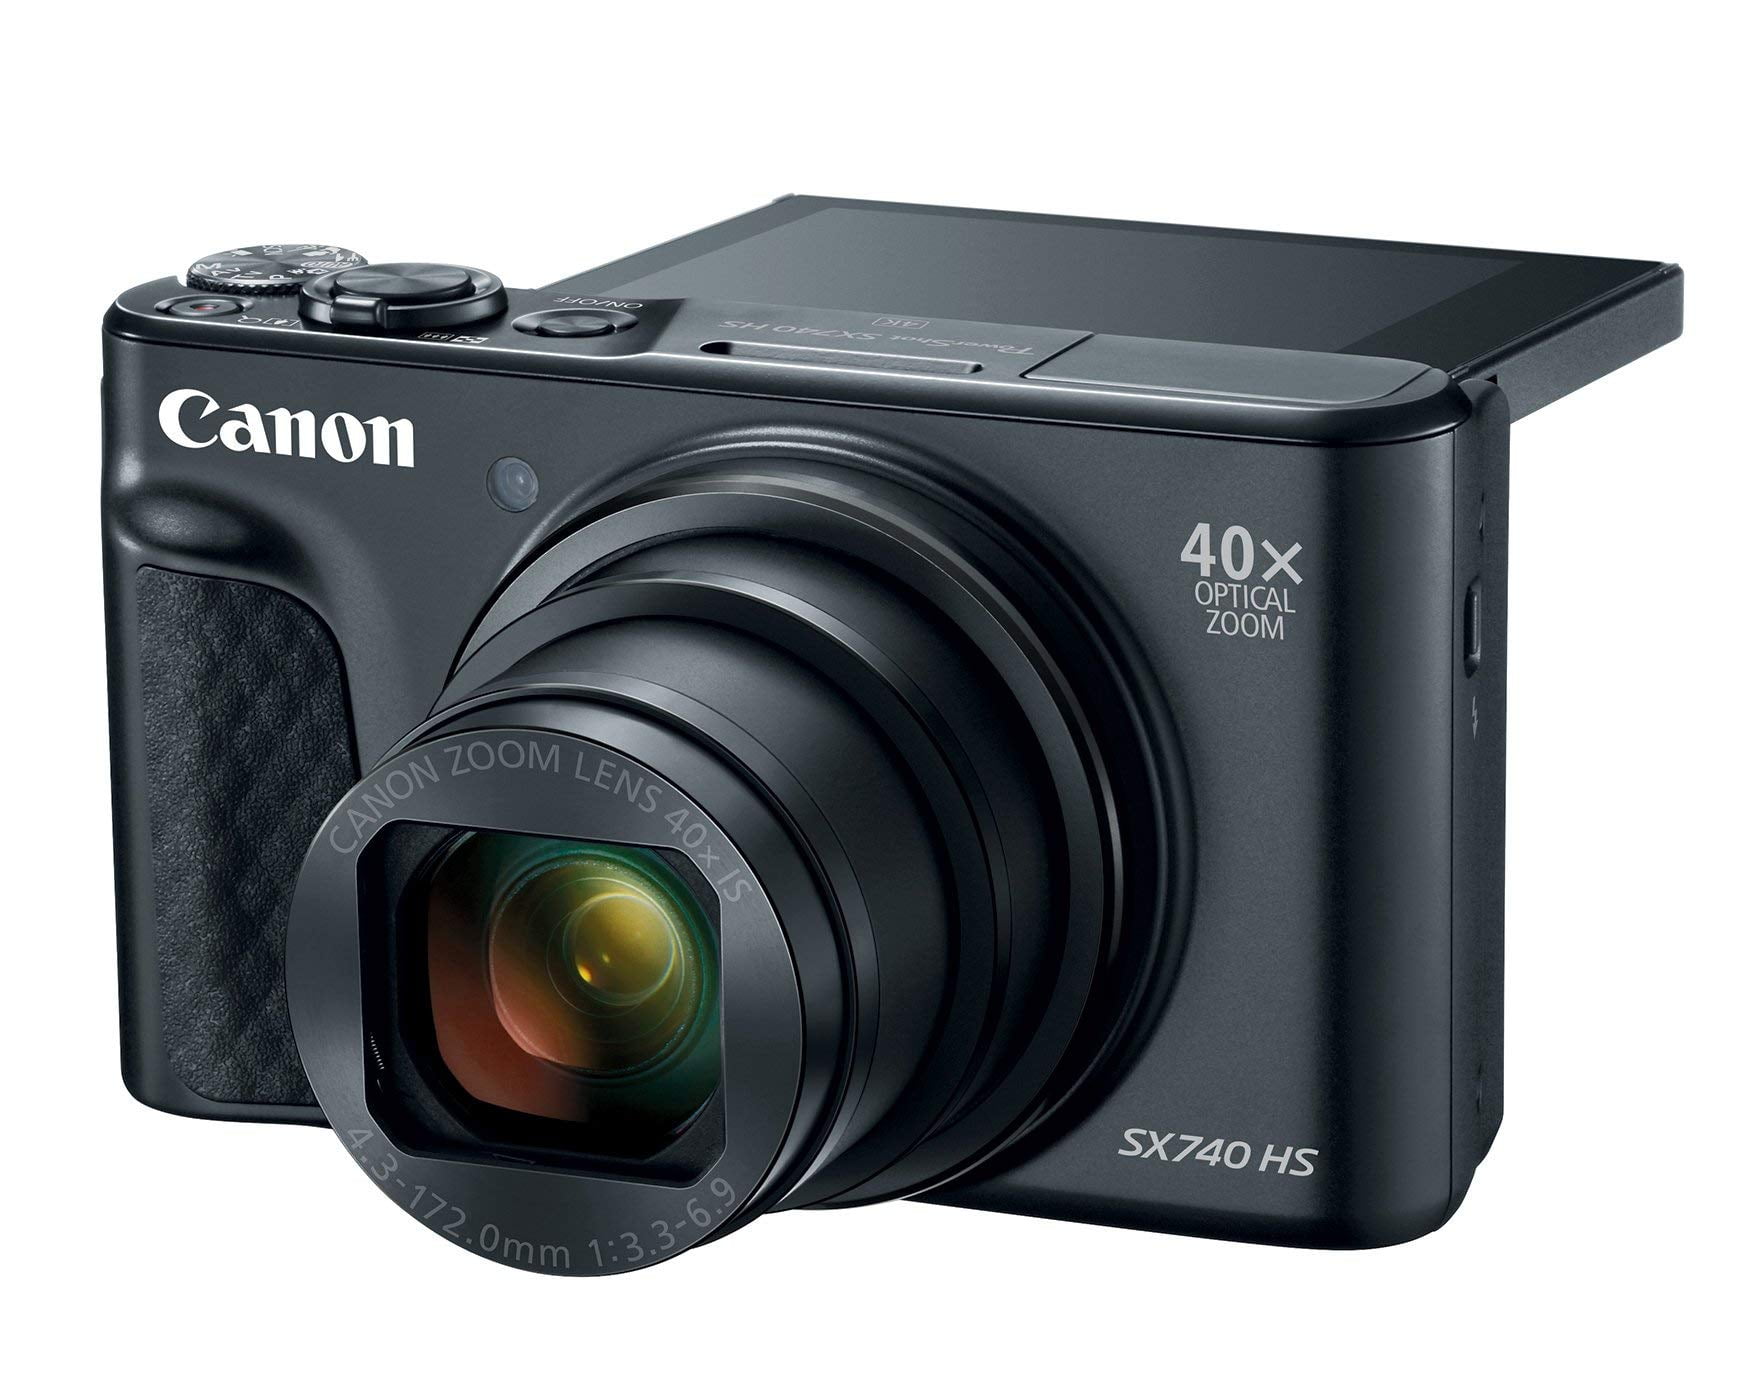 Restored Canon PowerShot SX740 Digital Camera w/40x Optical Zoom & 3 Inch  Tilt LCD - 4K VIdeo, Wi-Fi, NFC, Bluetooth Enabled (Black) (Refurbished)